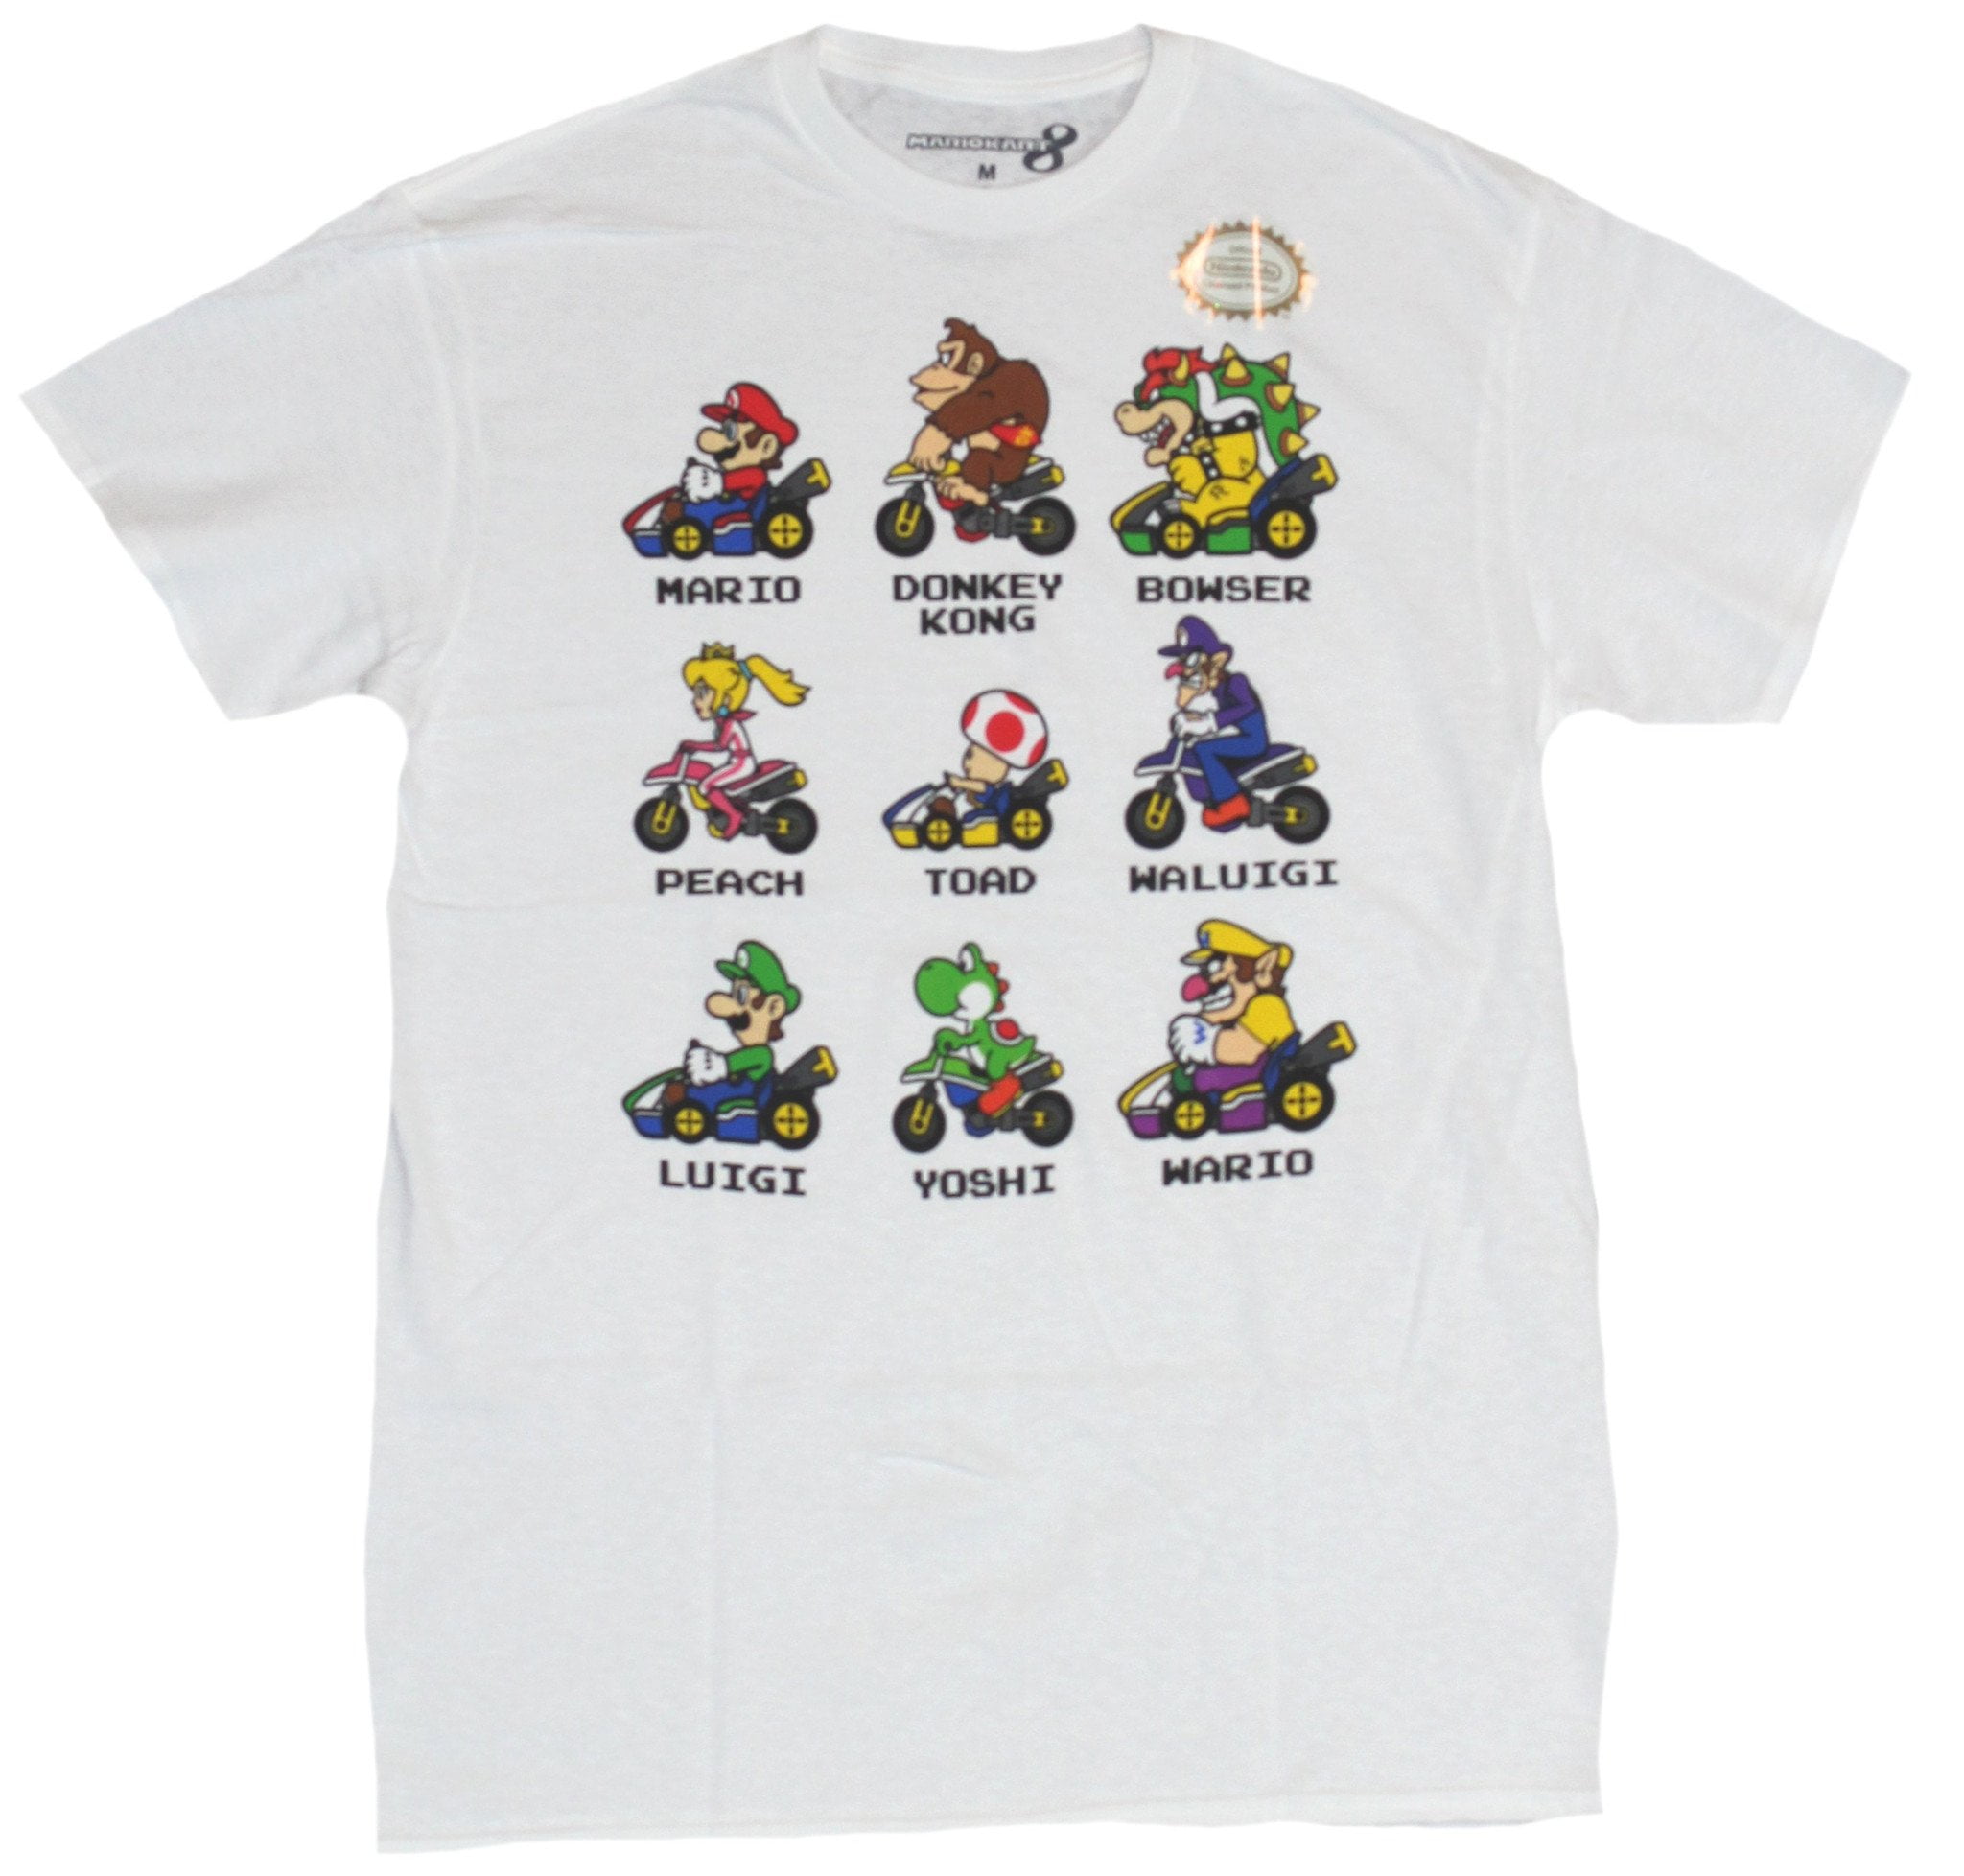 Nintendo - Mario Kart Mens T-Shirt - Collection Of 9 Classic Nintendo ...